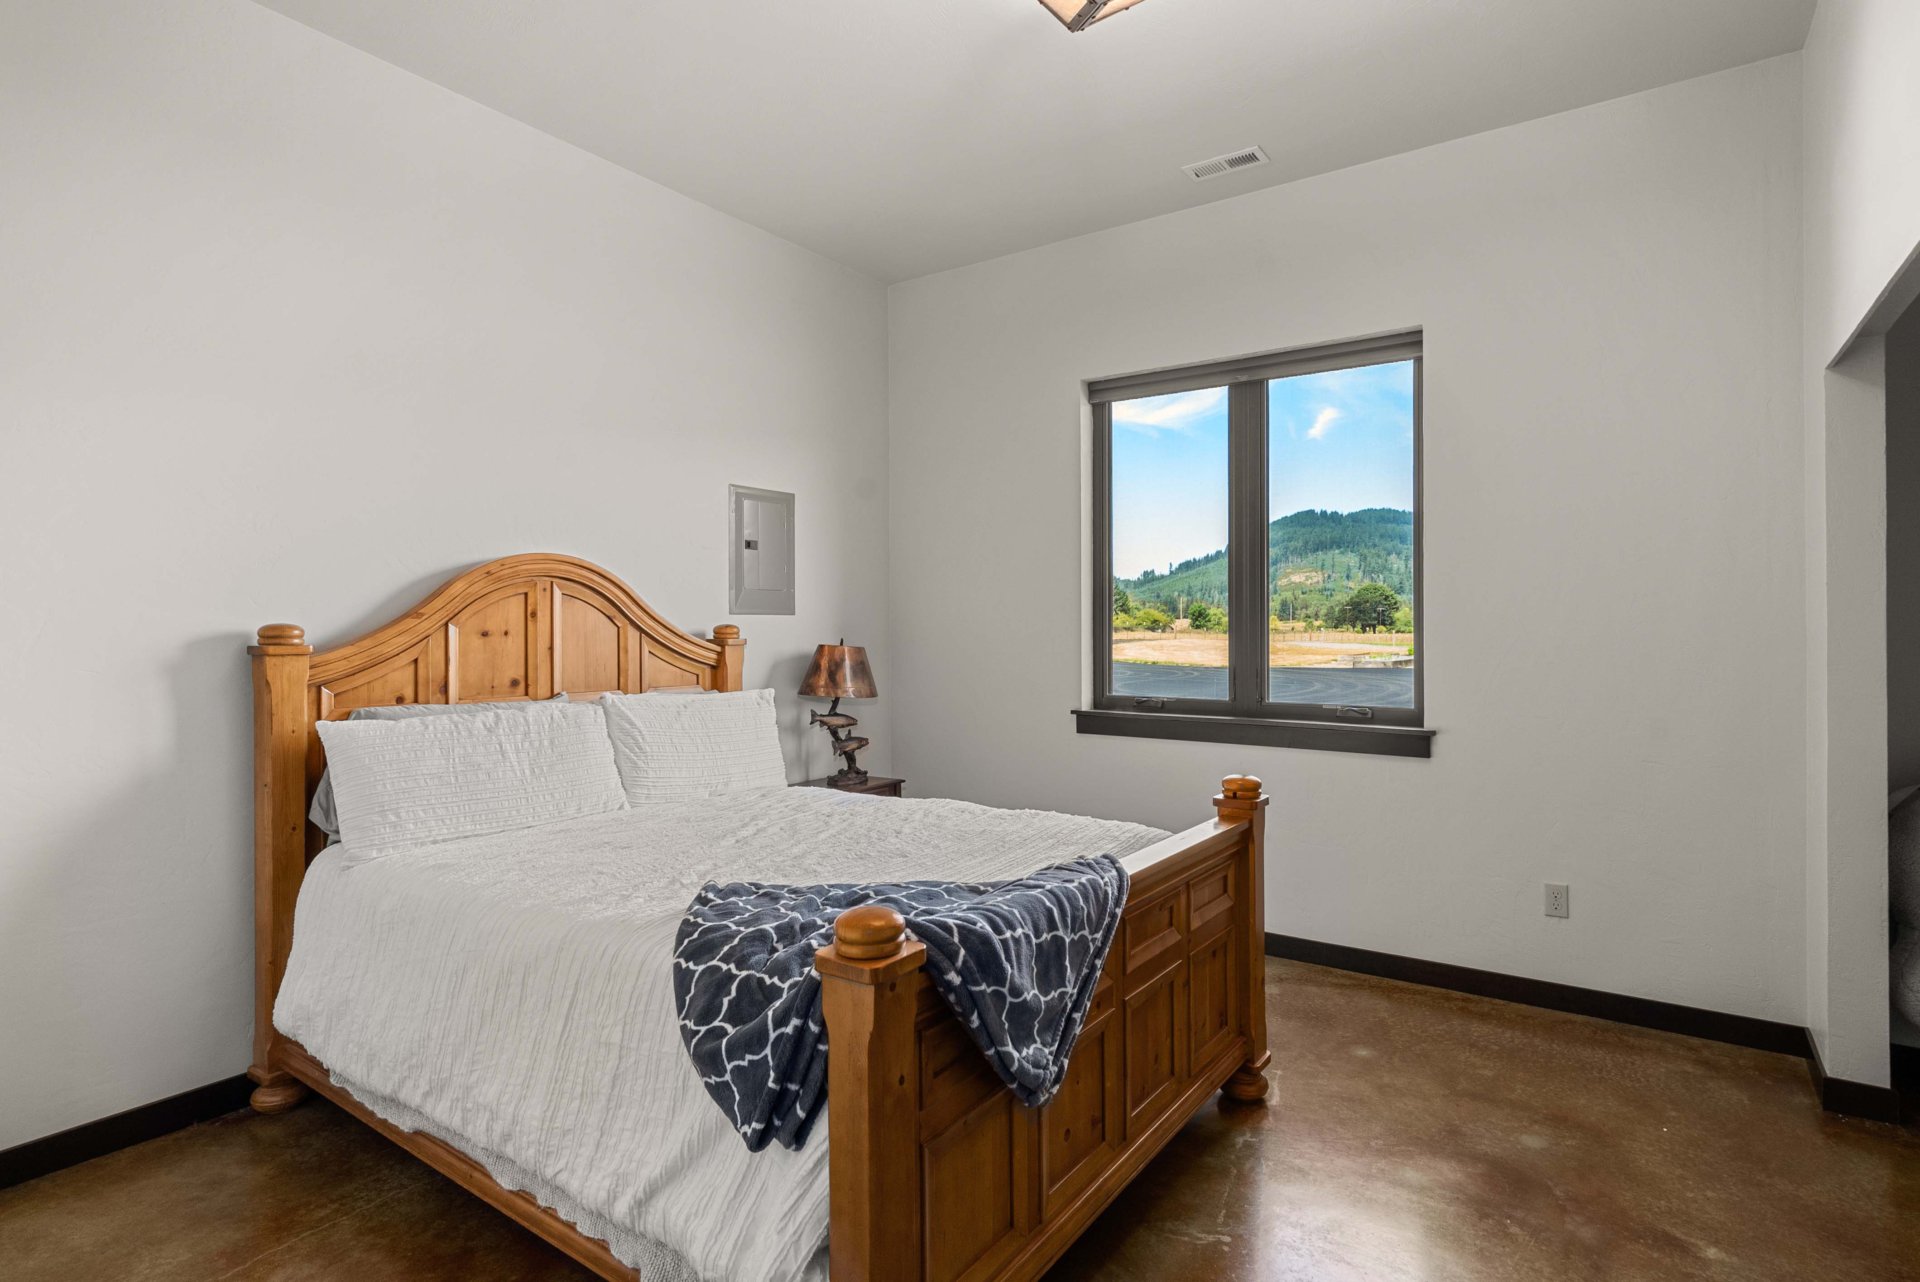 guest bedroom washington valley lake ranch